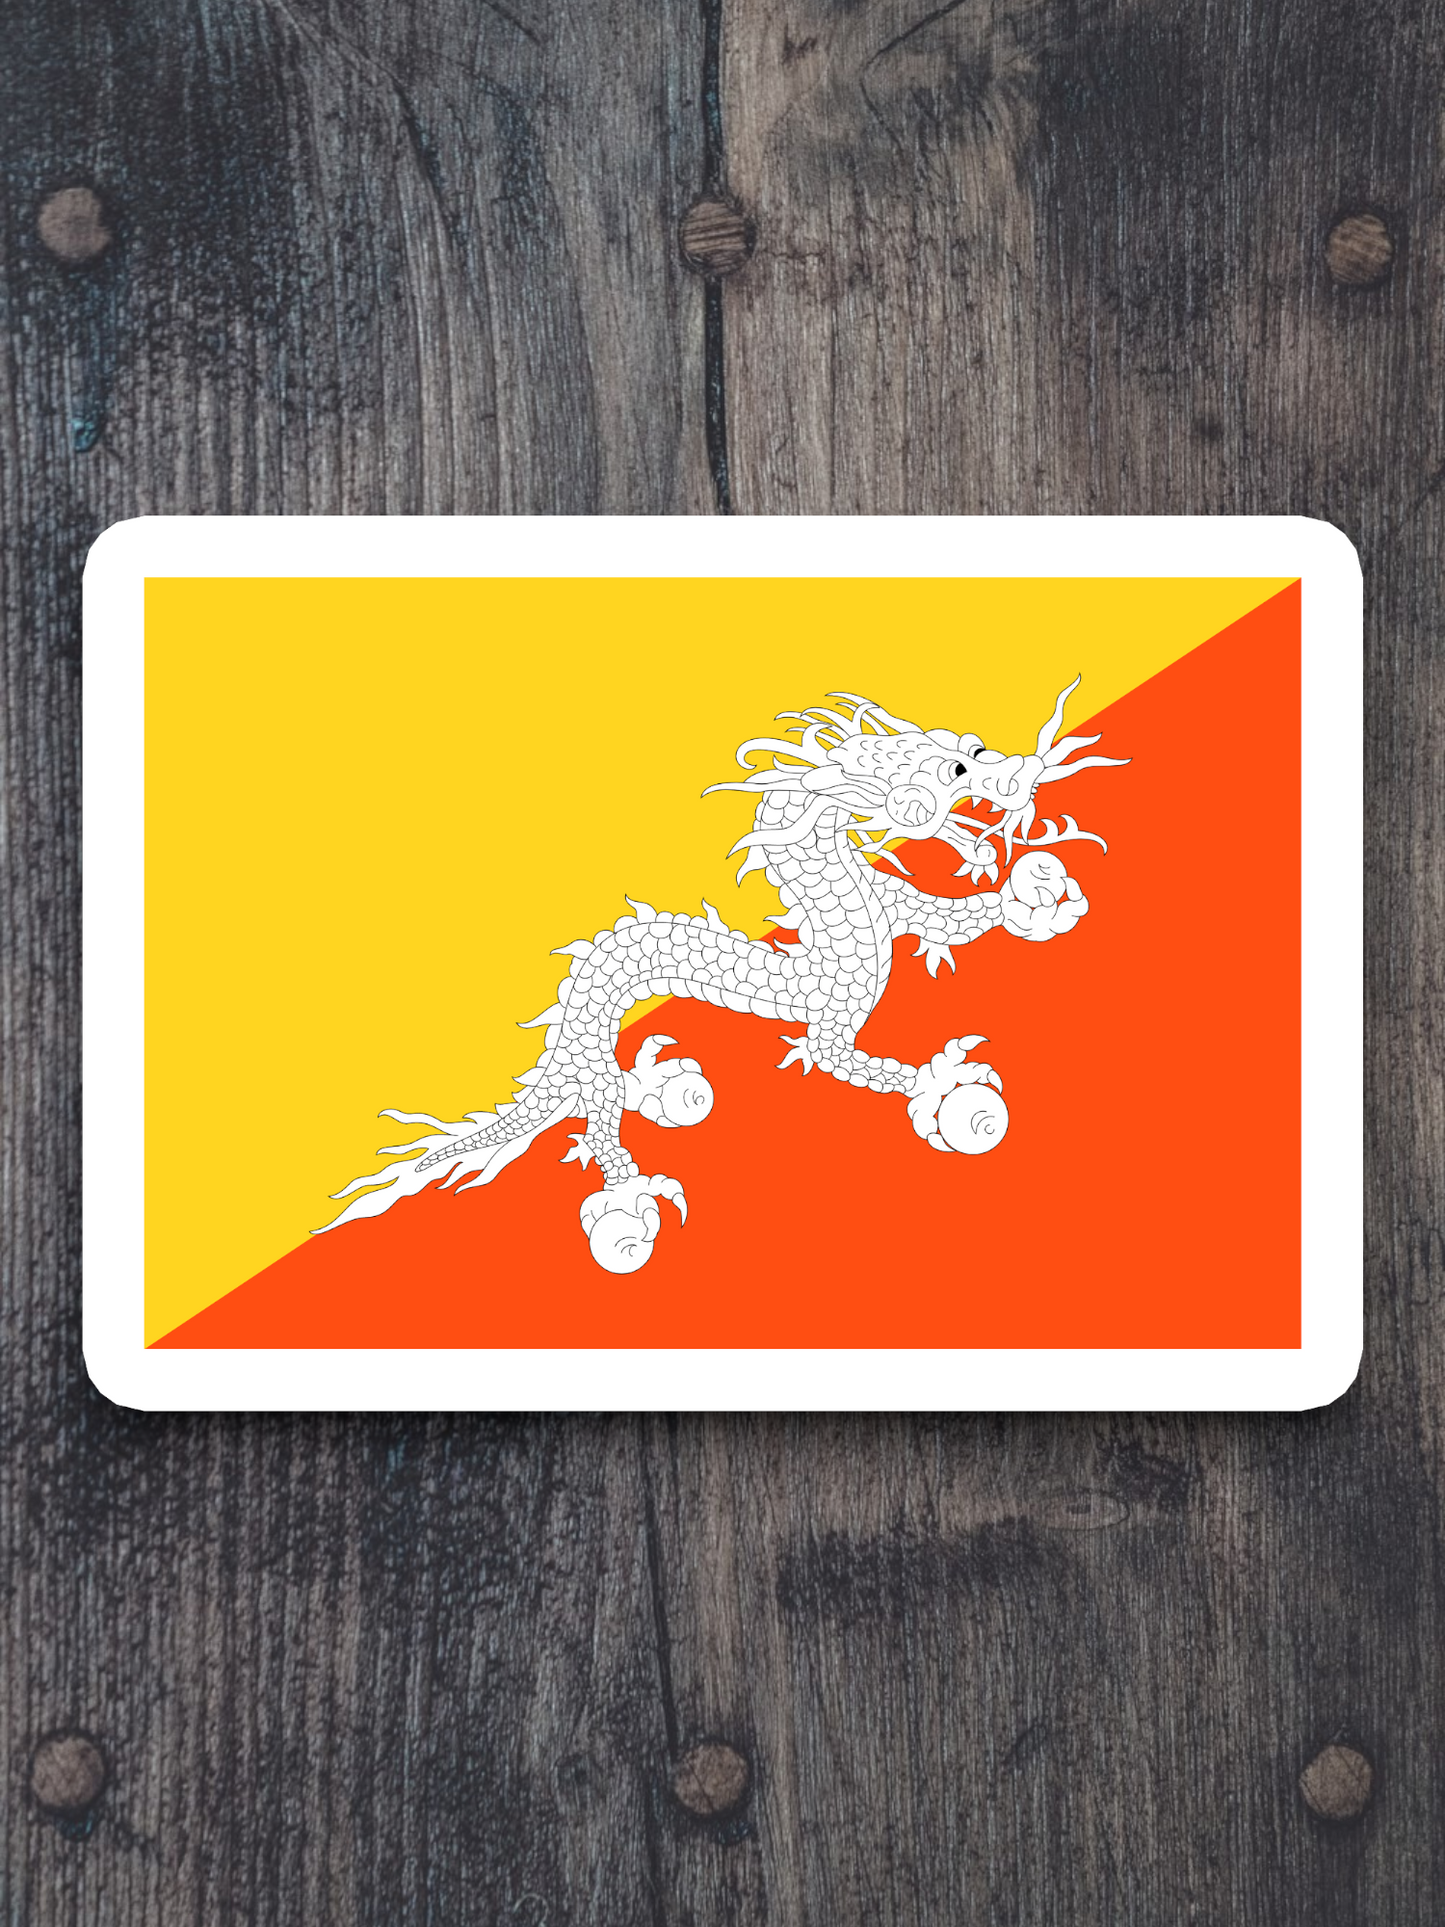 Bhutan Flag - International Country Flag Sticker